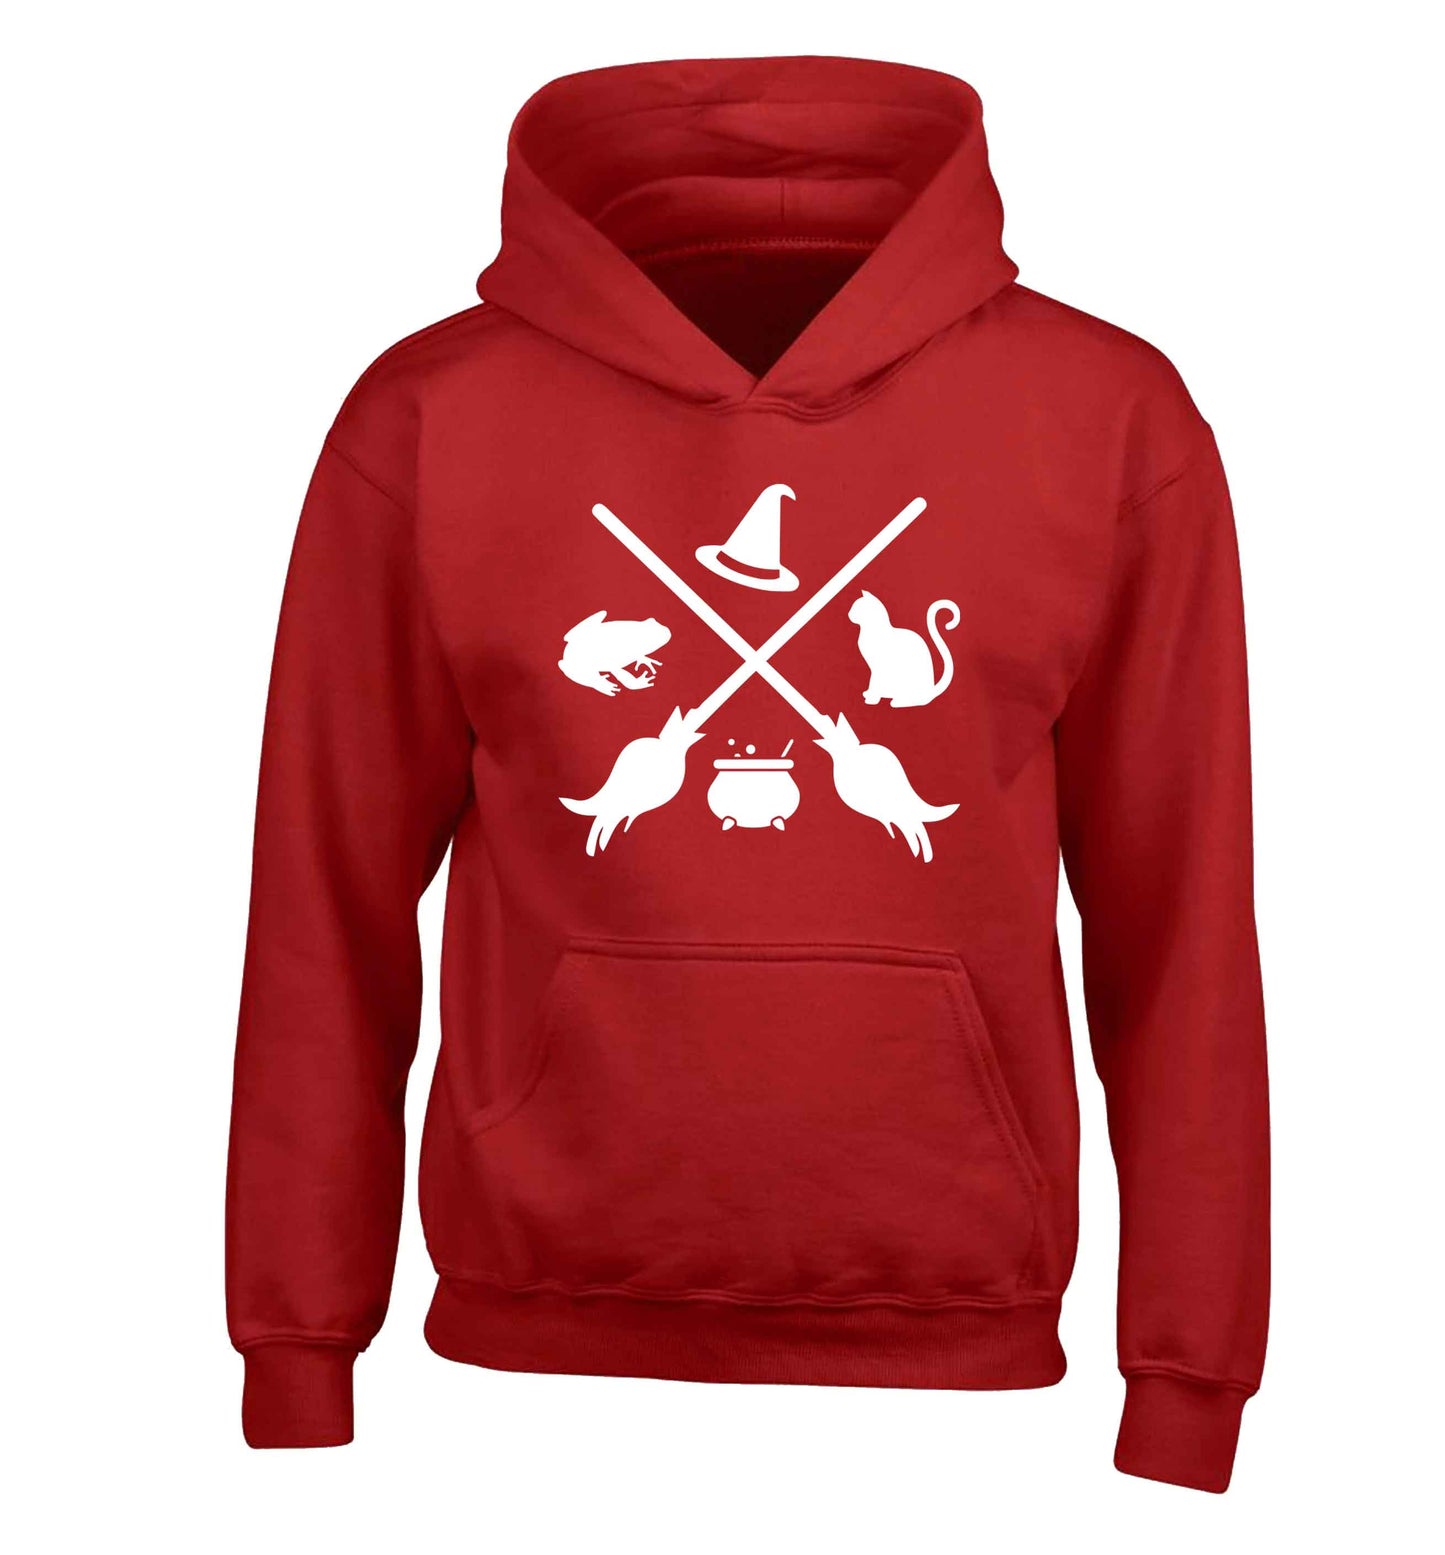 Witch symbol children's red hoodie 12-13 Years